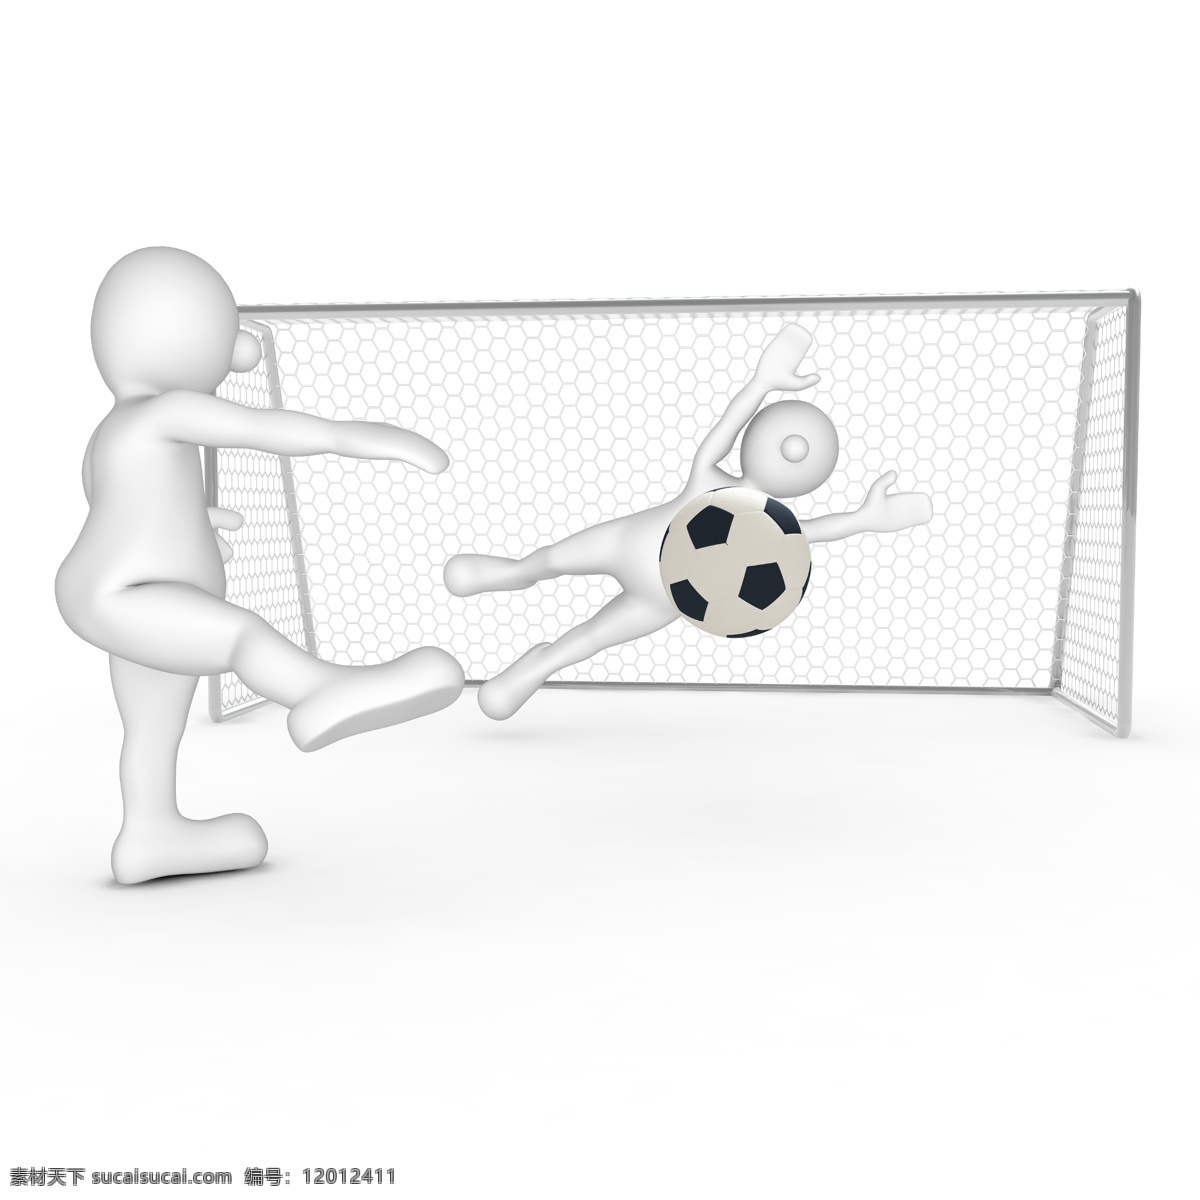 3d人物 3d设计 3d小人 踢球 踢足球 足球比赛 足球运动 踢 足球 设计素材 模板下载 进球 守门员 白色小人 矢量图 日常生活